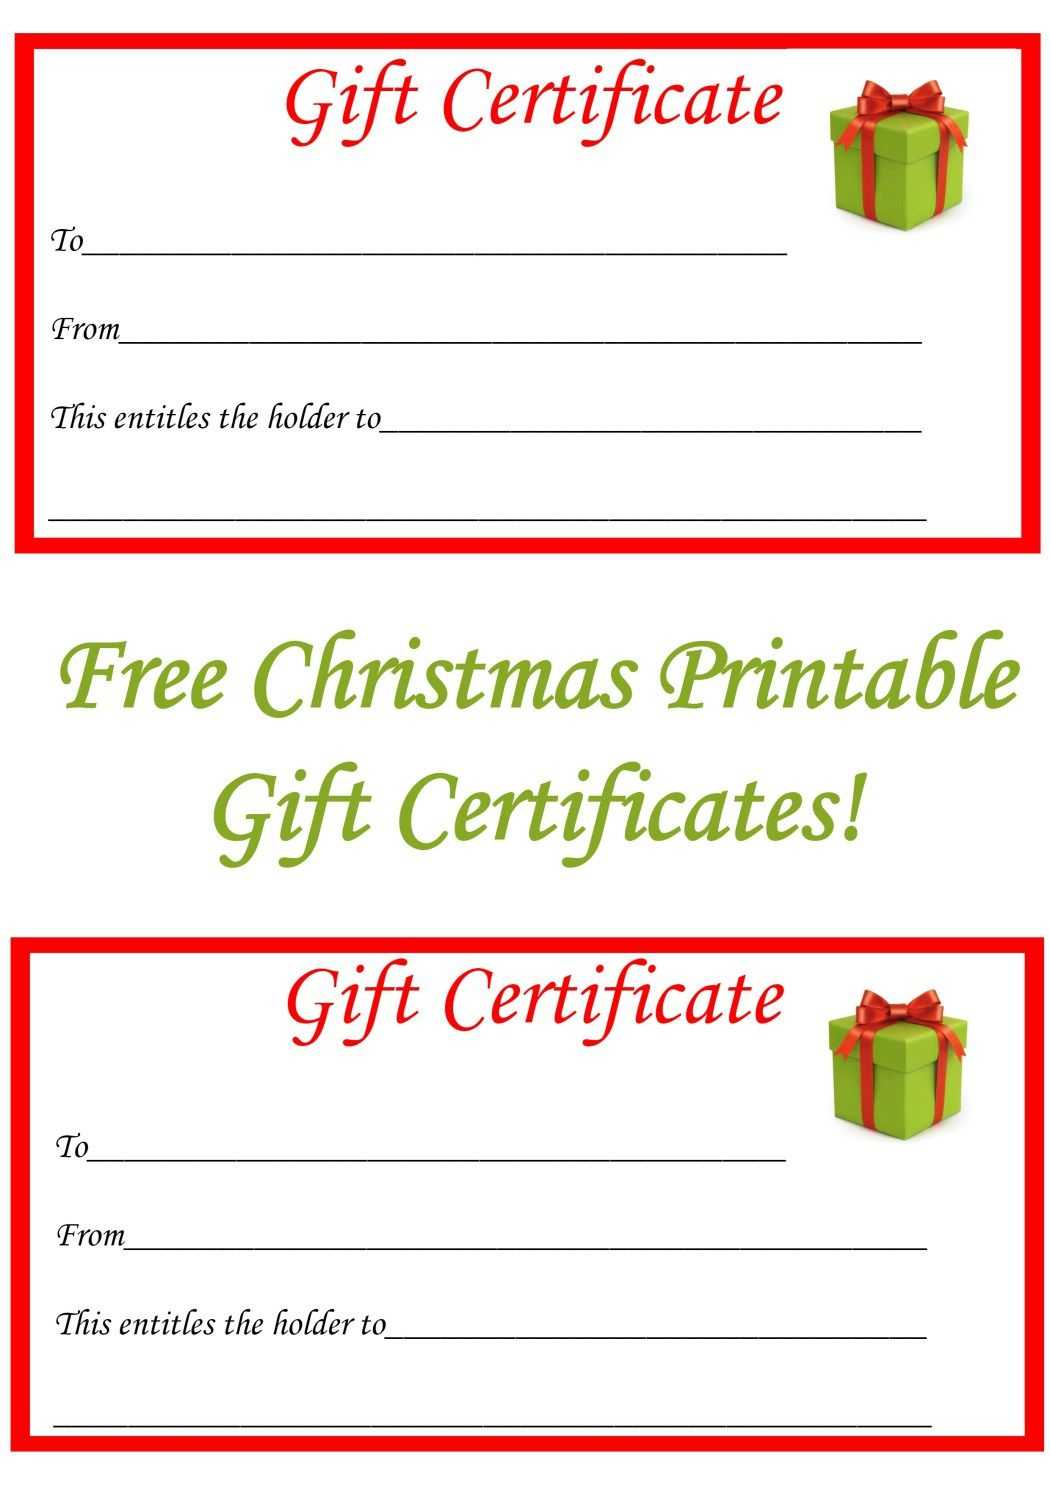 Free Christmas Printable Gift Certificates | Free Gift Regarding Homemade Christmas Gift Certificates Templates